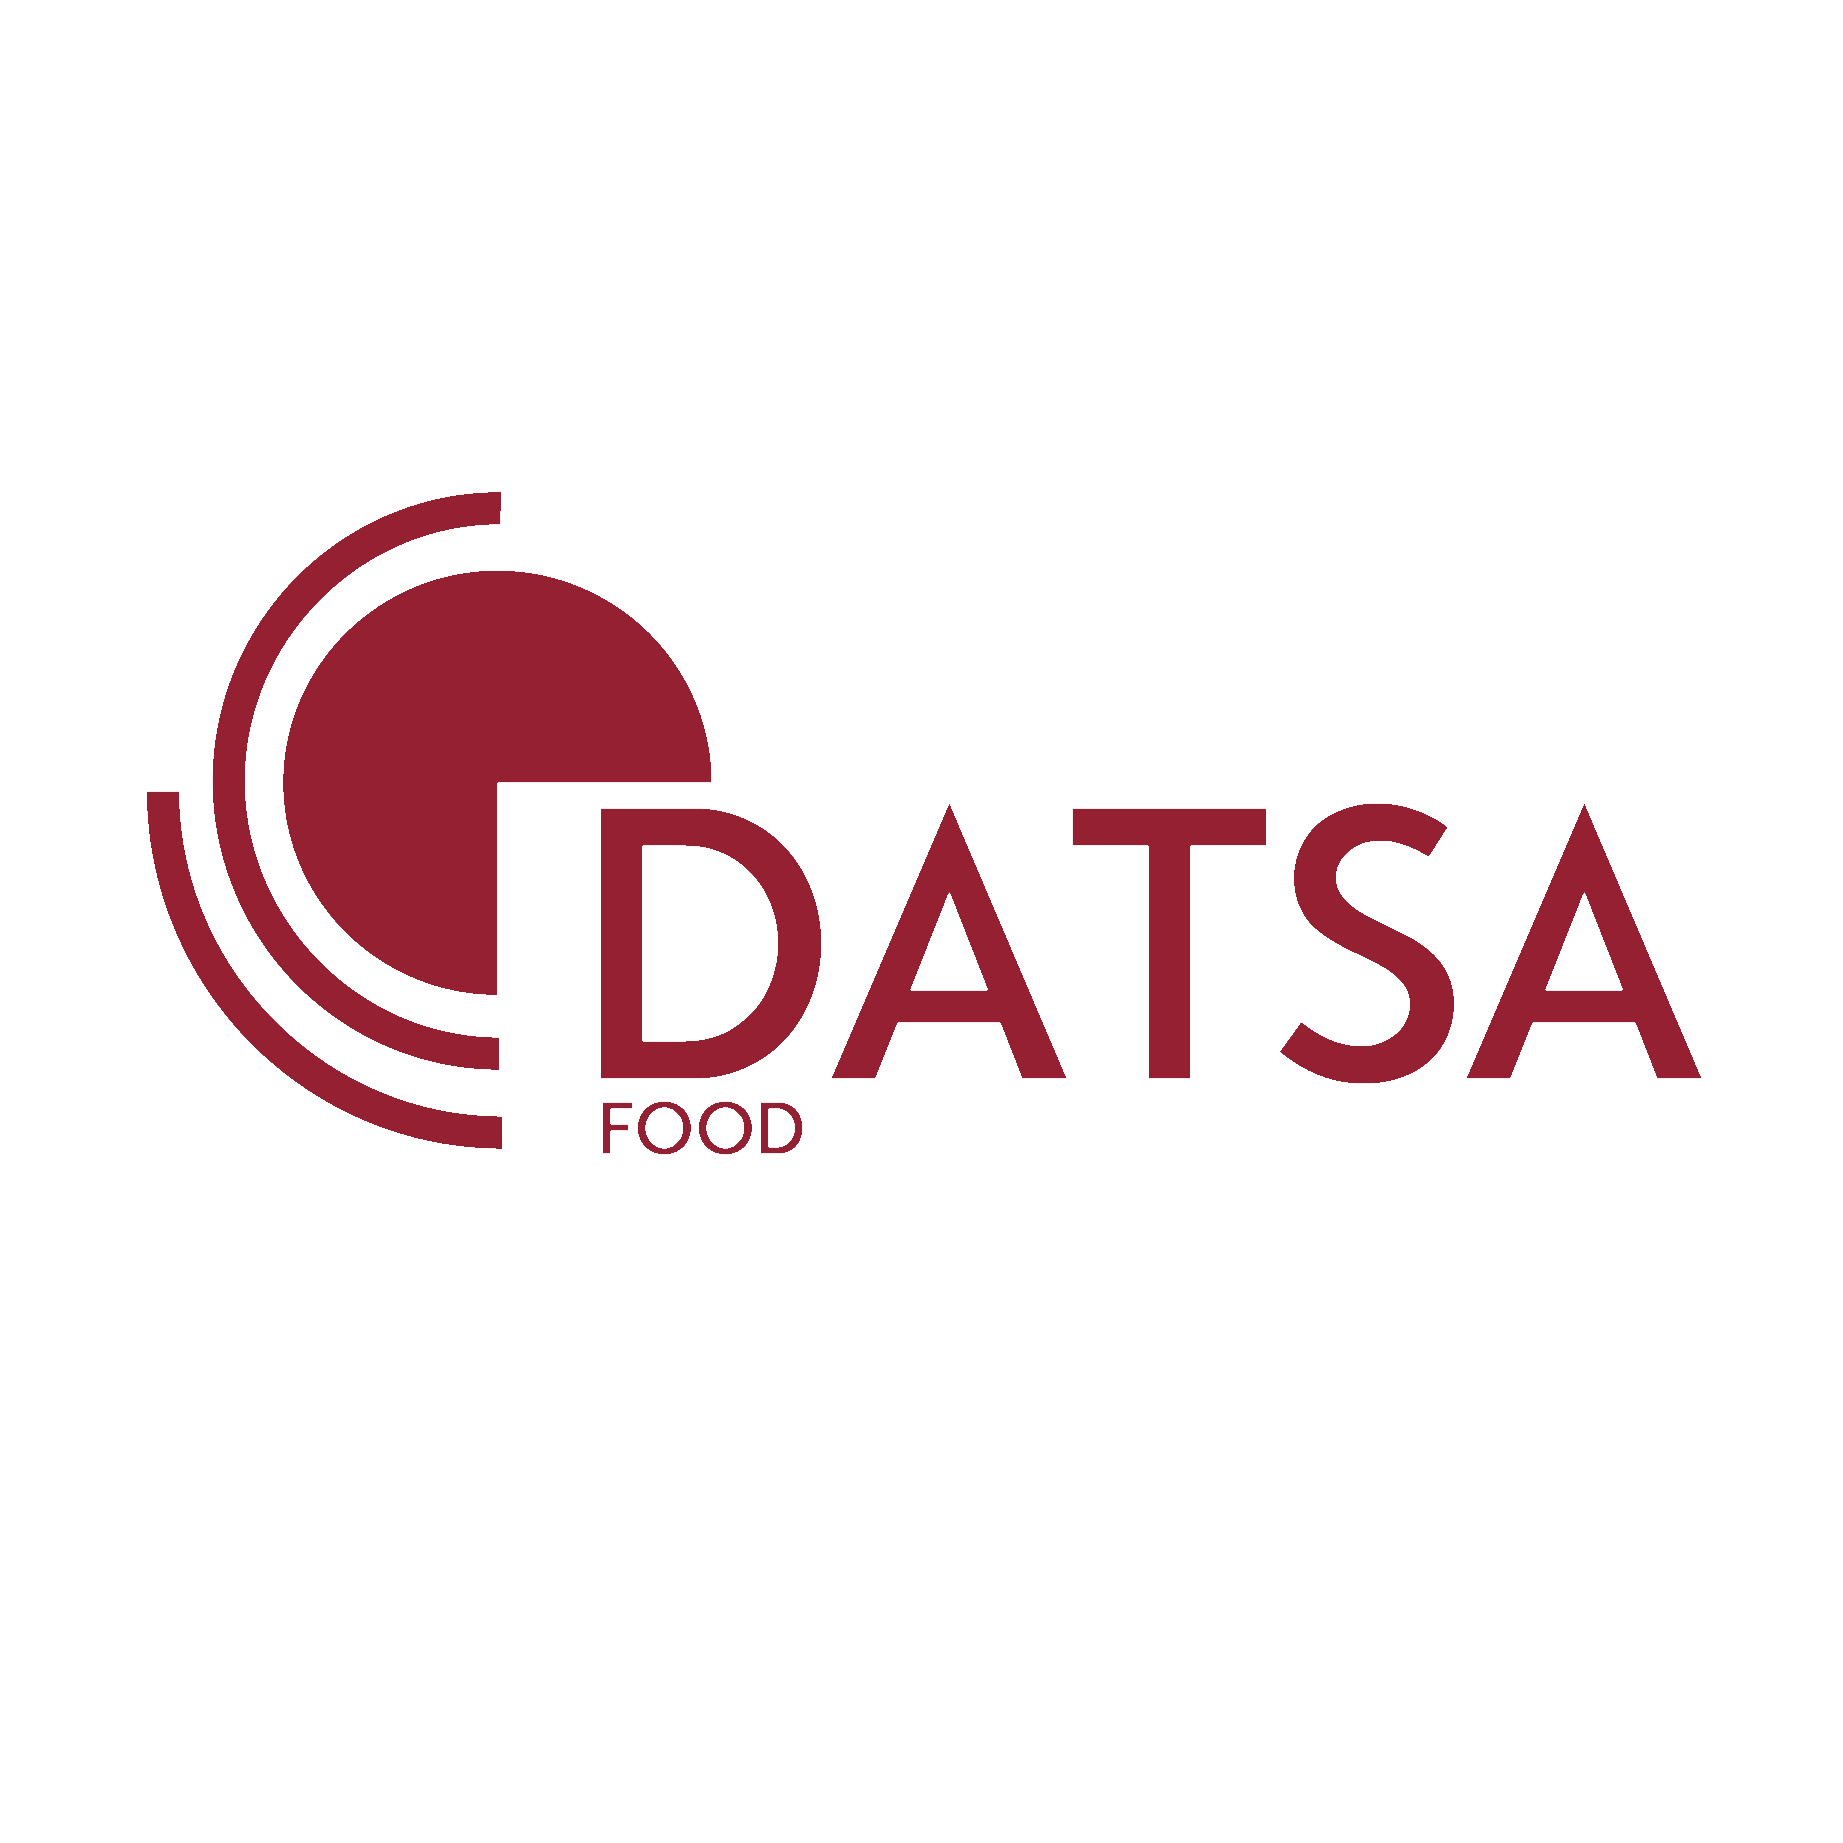 Datsa Food Molina de Segura